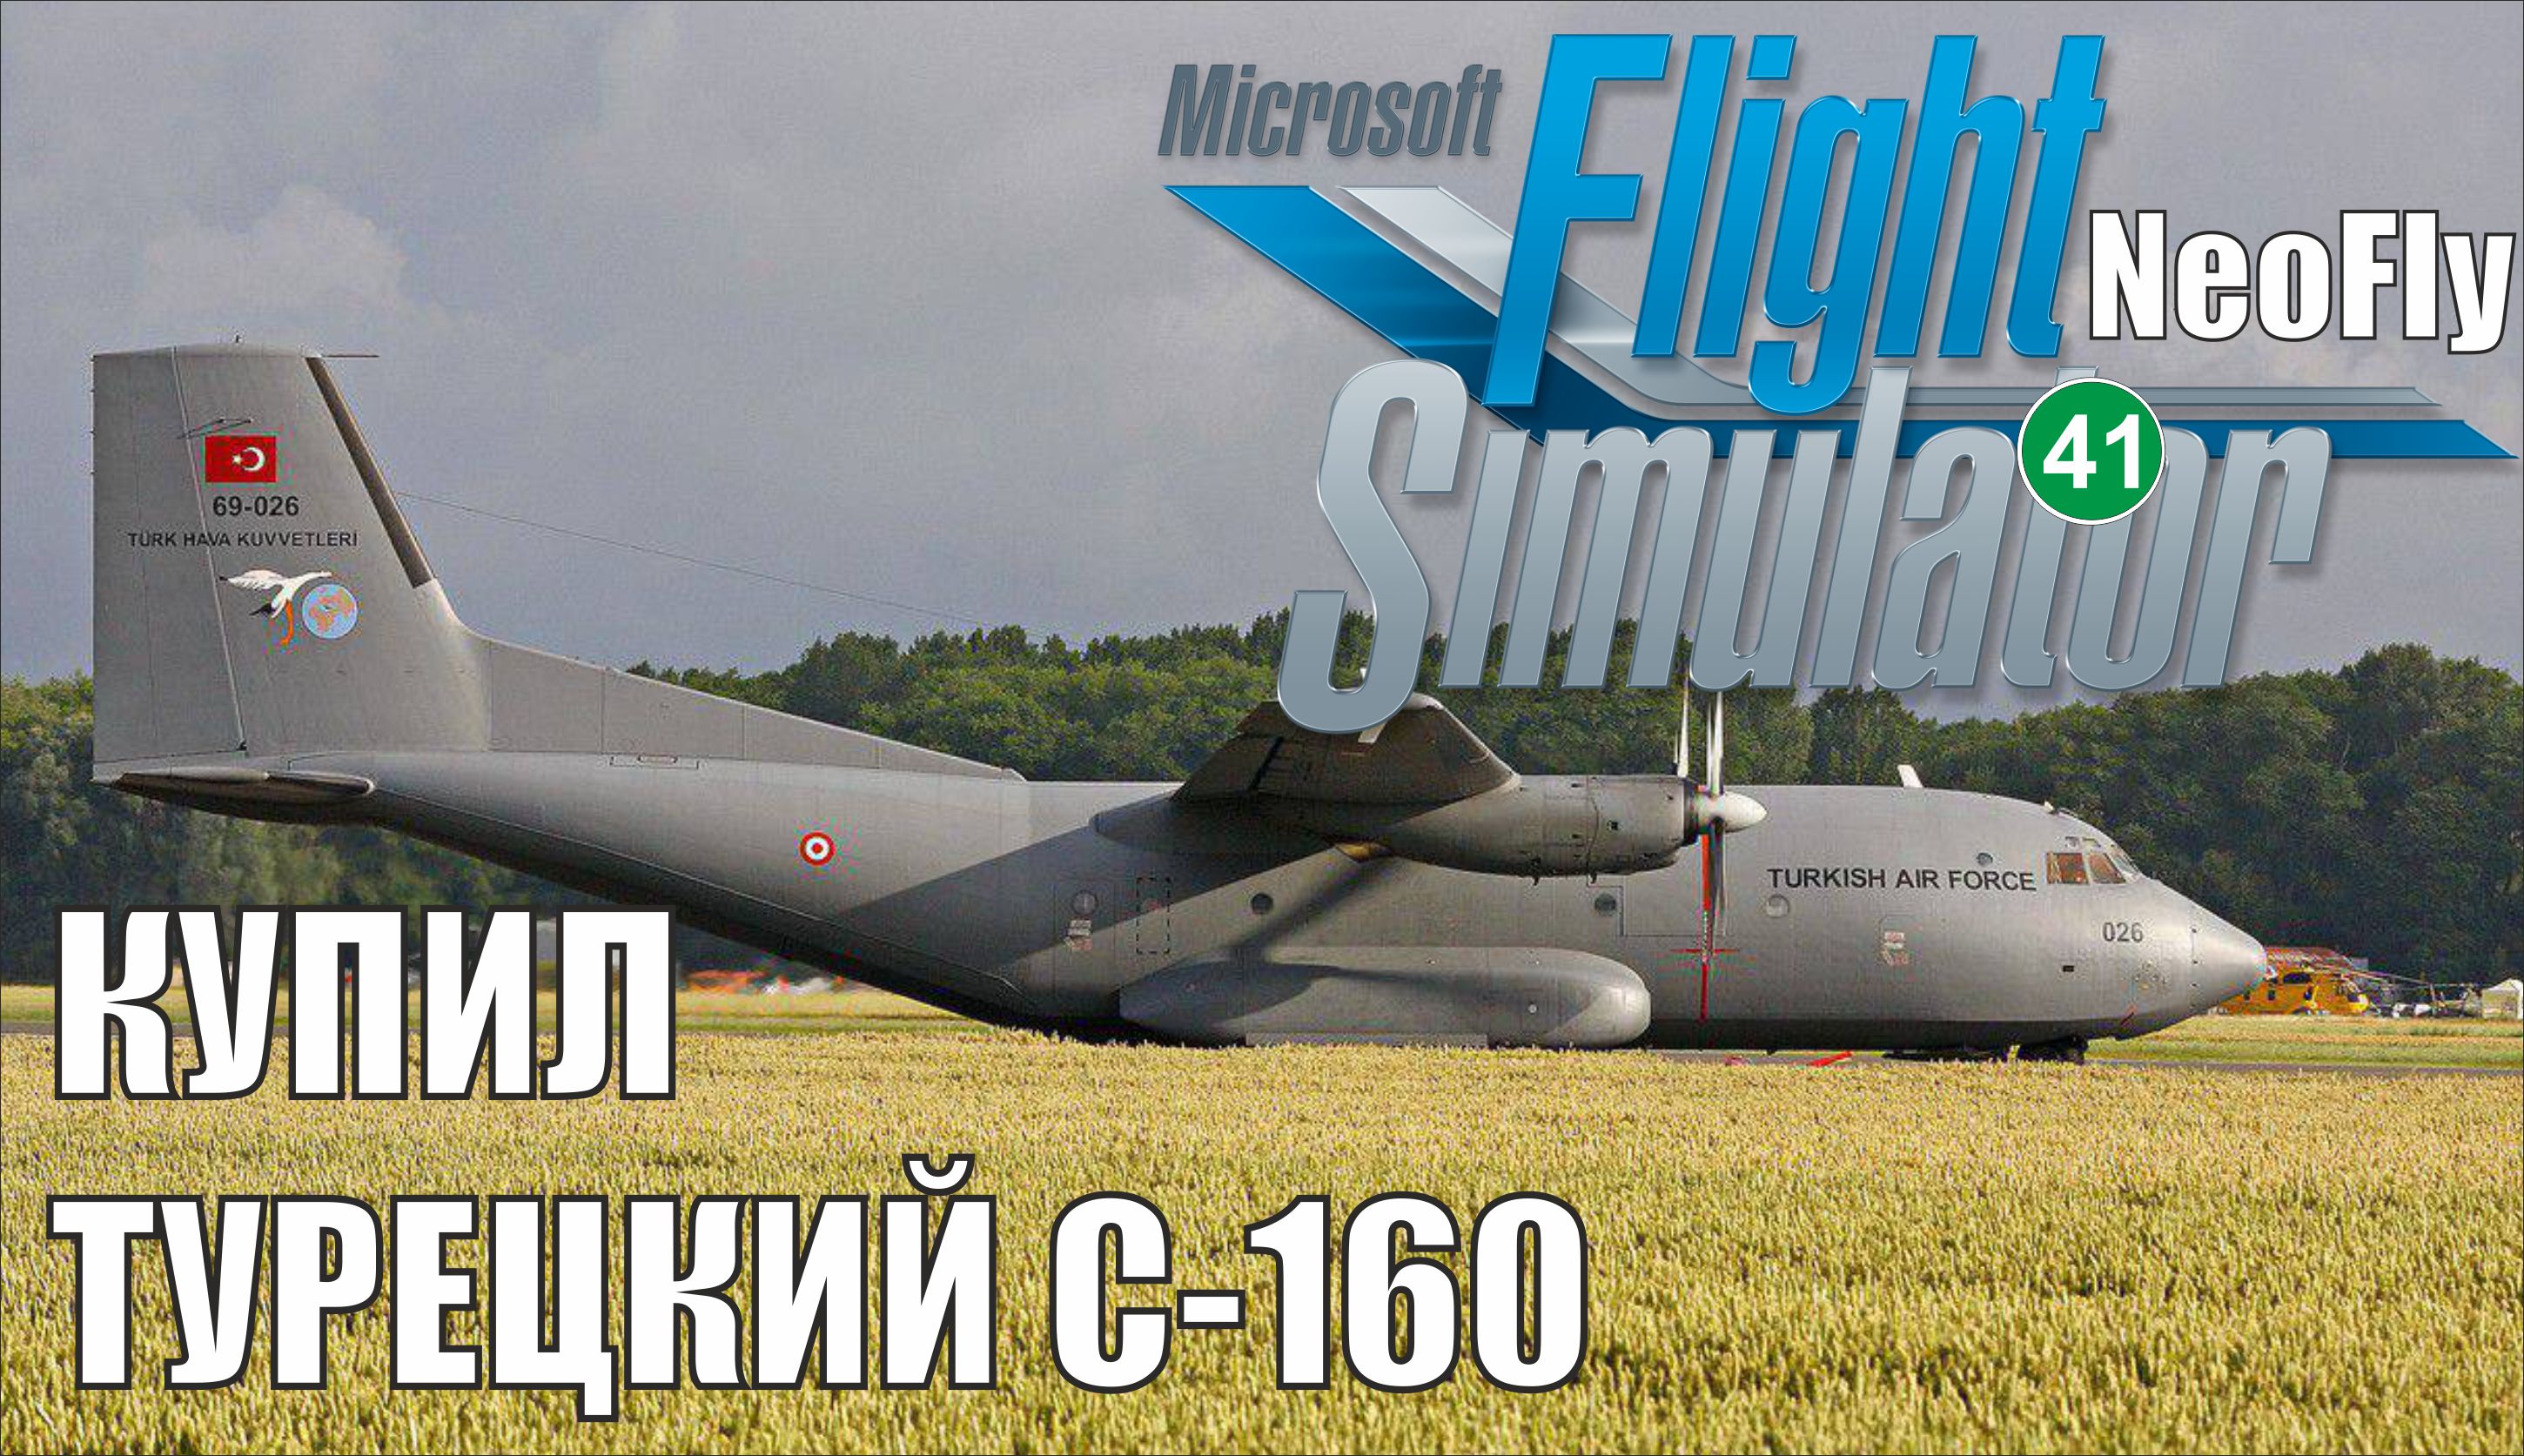 Microsoft Flight Simulator 2020 (NeoFly) - Купил турецкий C-160